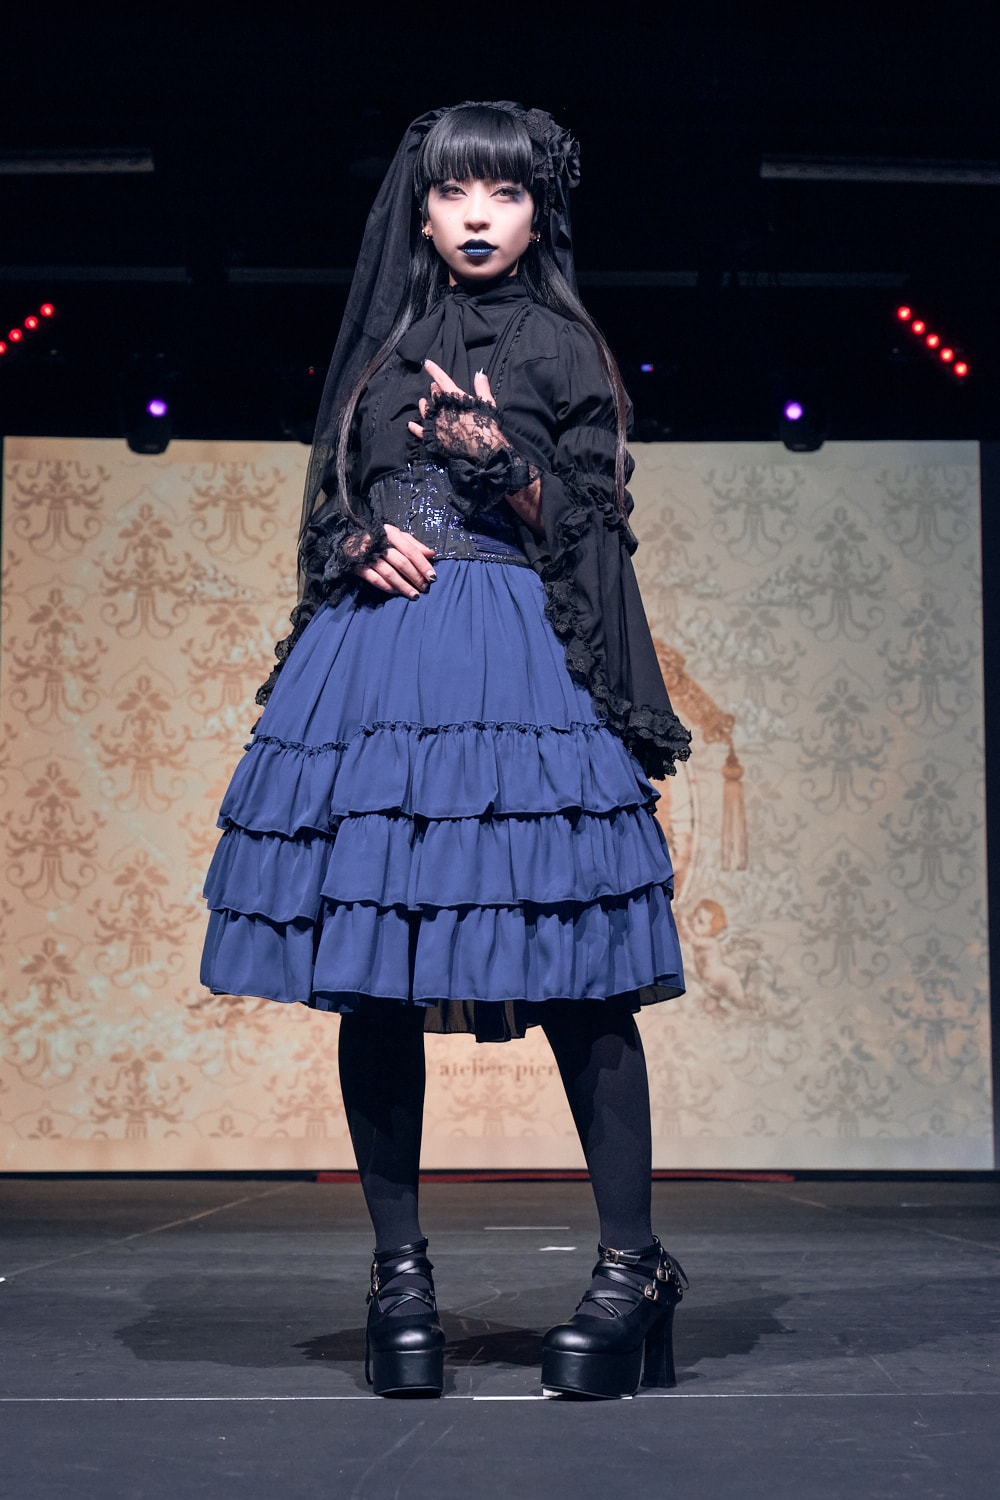 Atelier Pierrot gothic lolita model wearing black blouse, blue corset and skirt - full body standing pose 3.